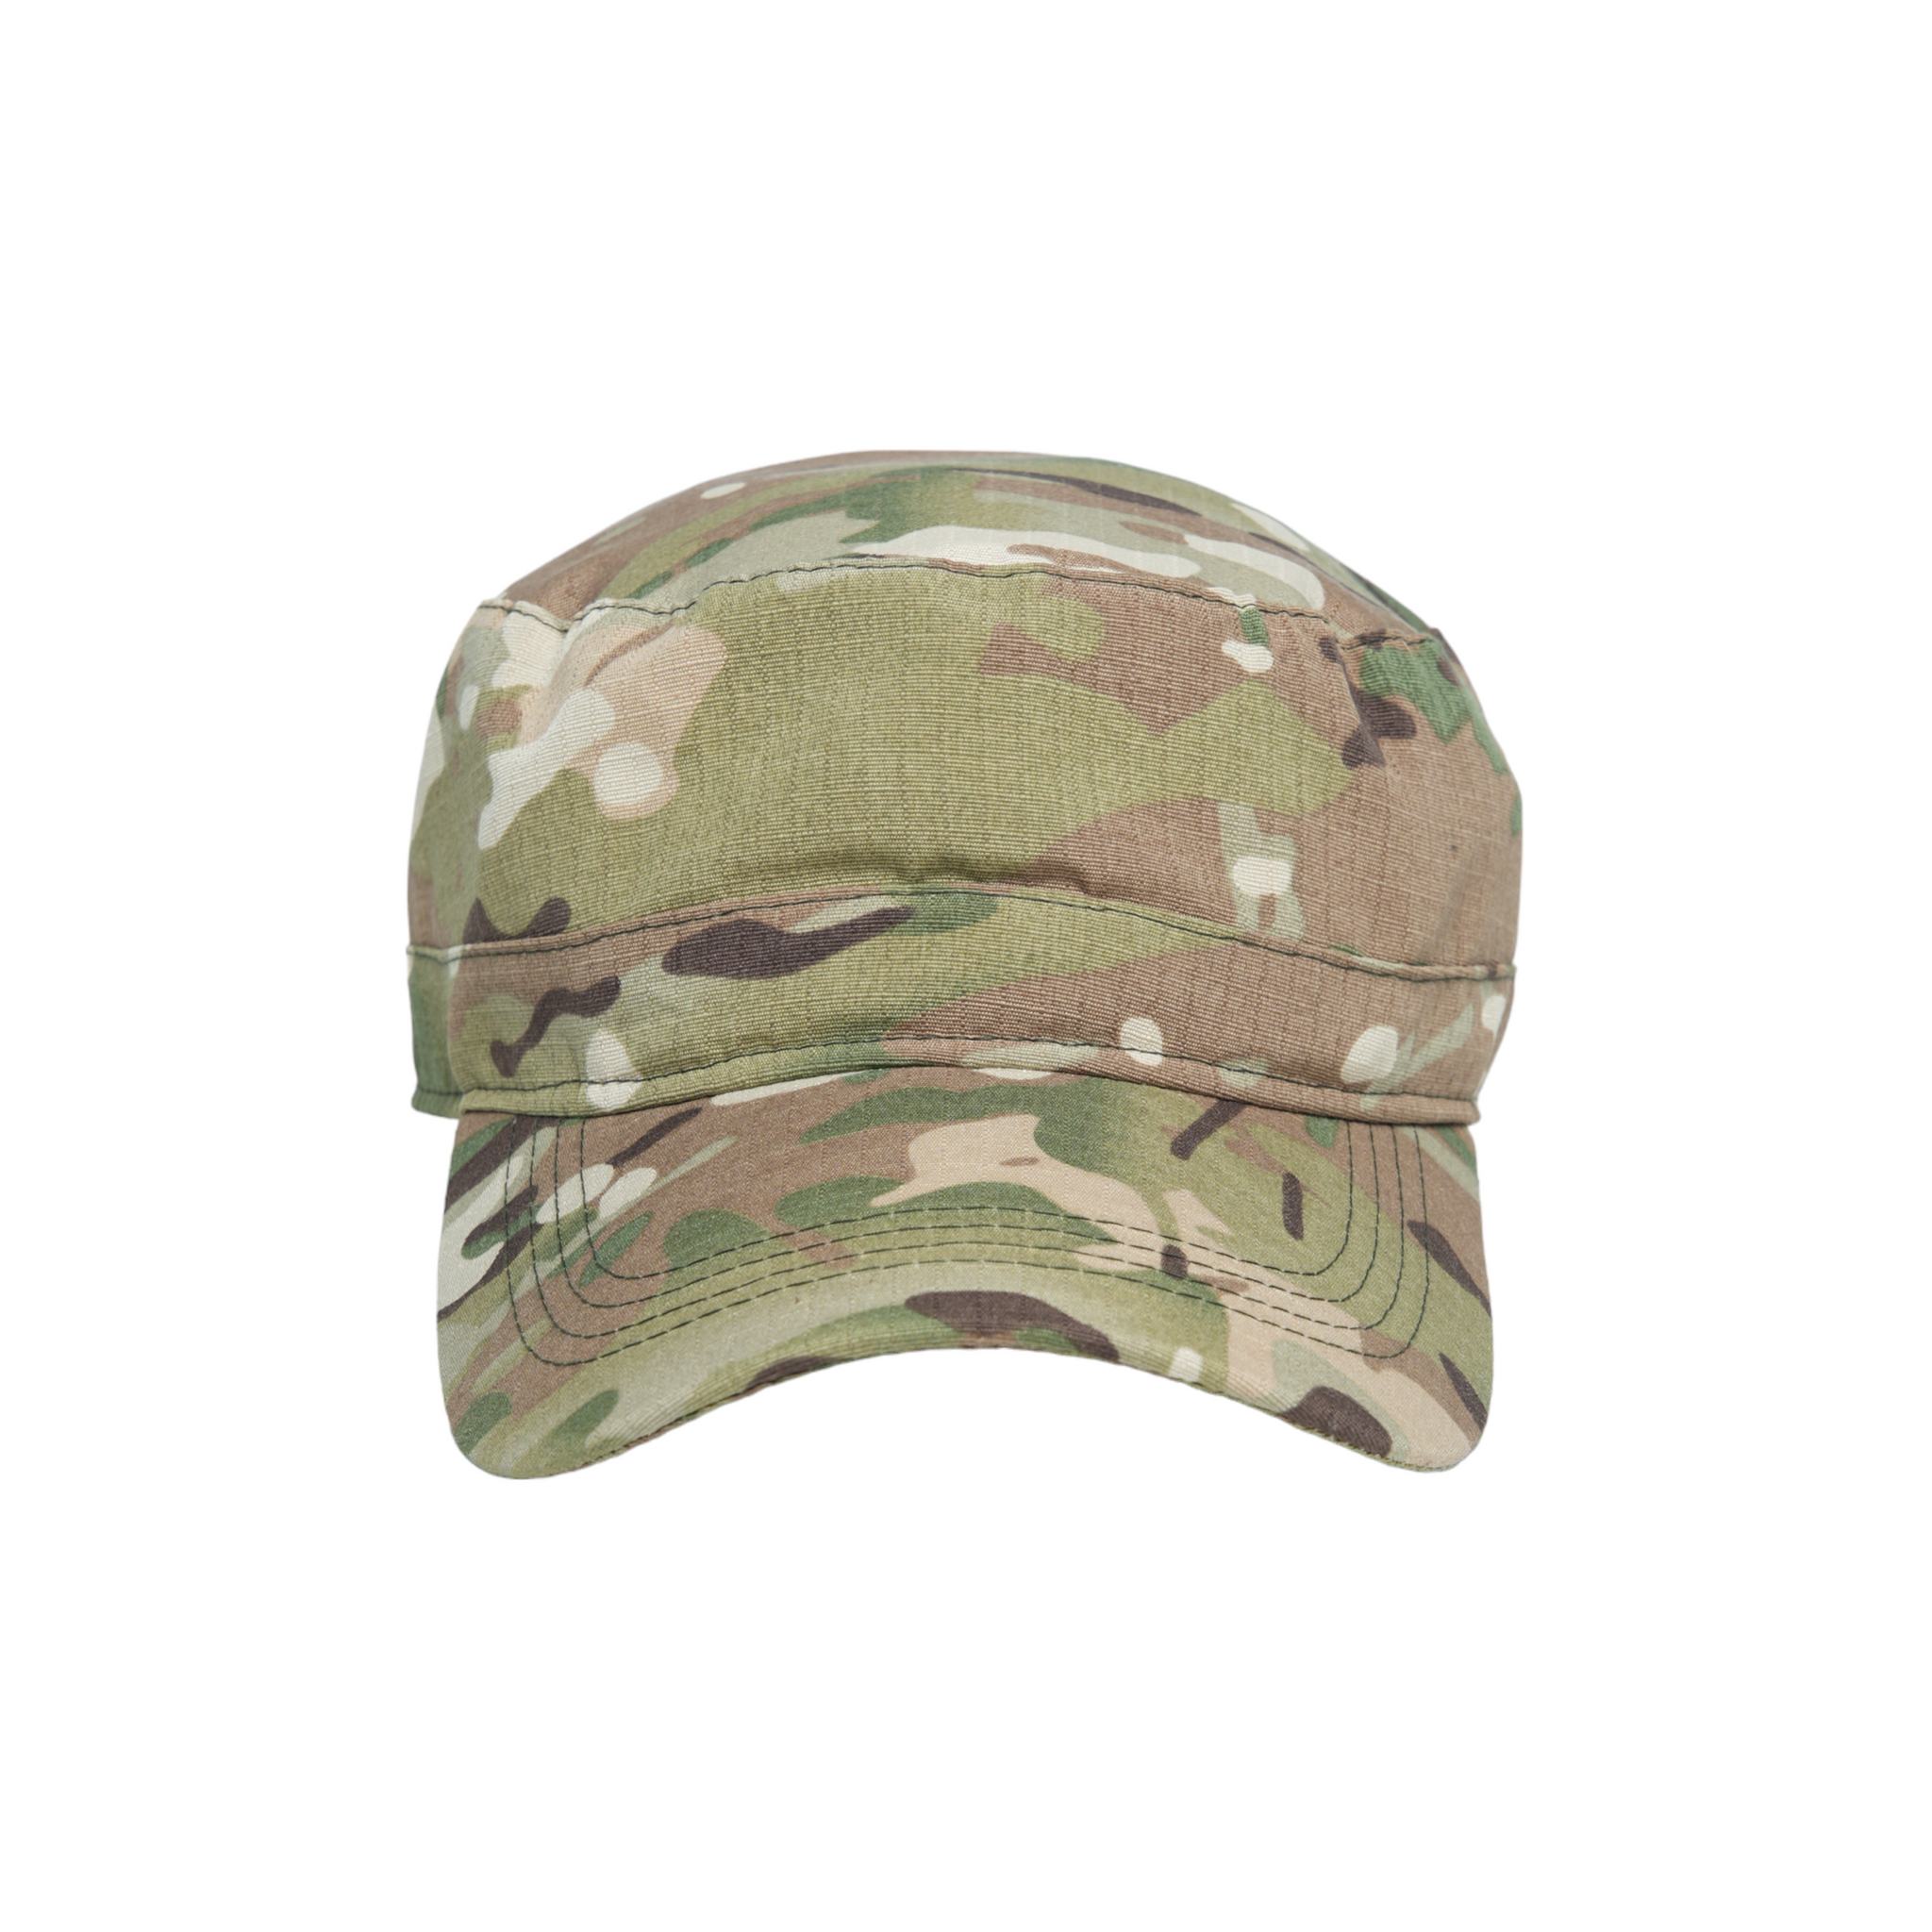 Chokore Camouflage Flat Top Cap (Army Green)